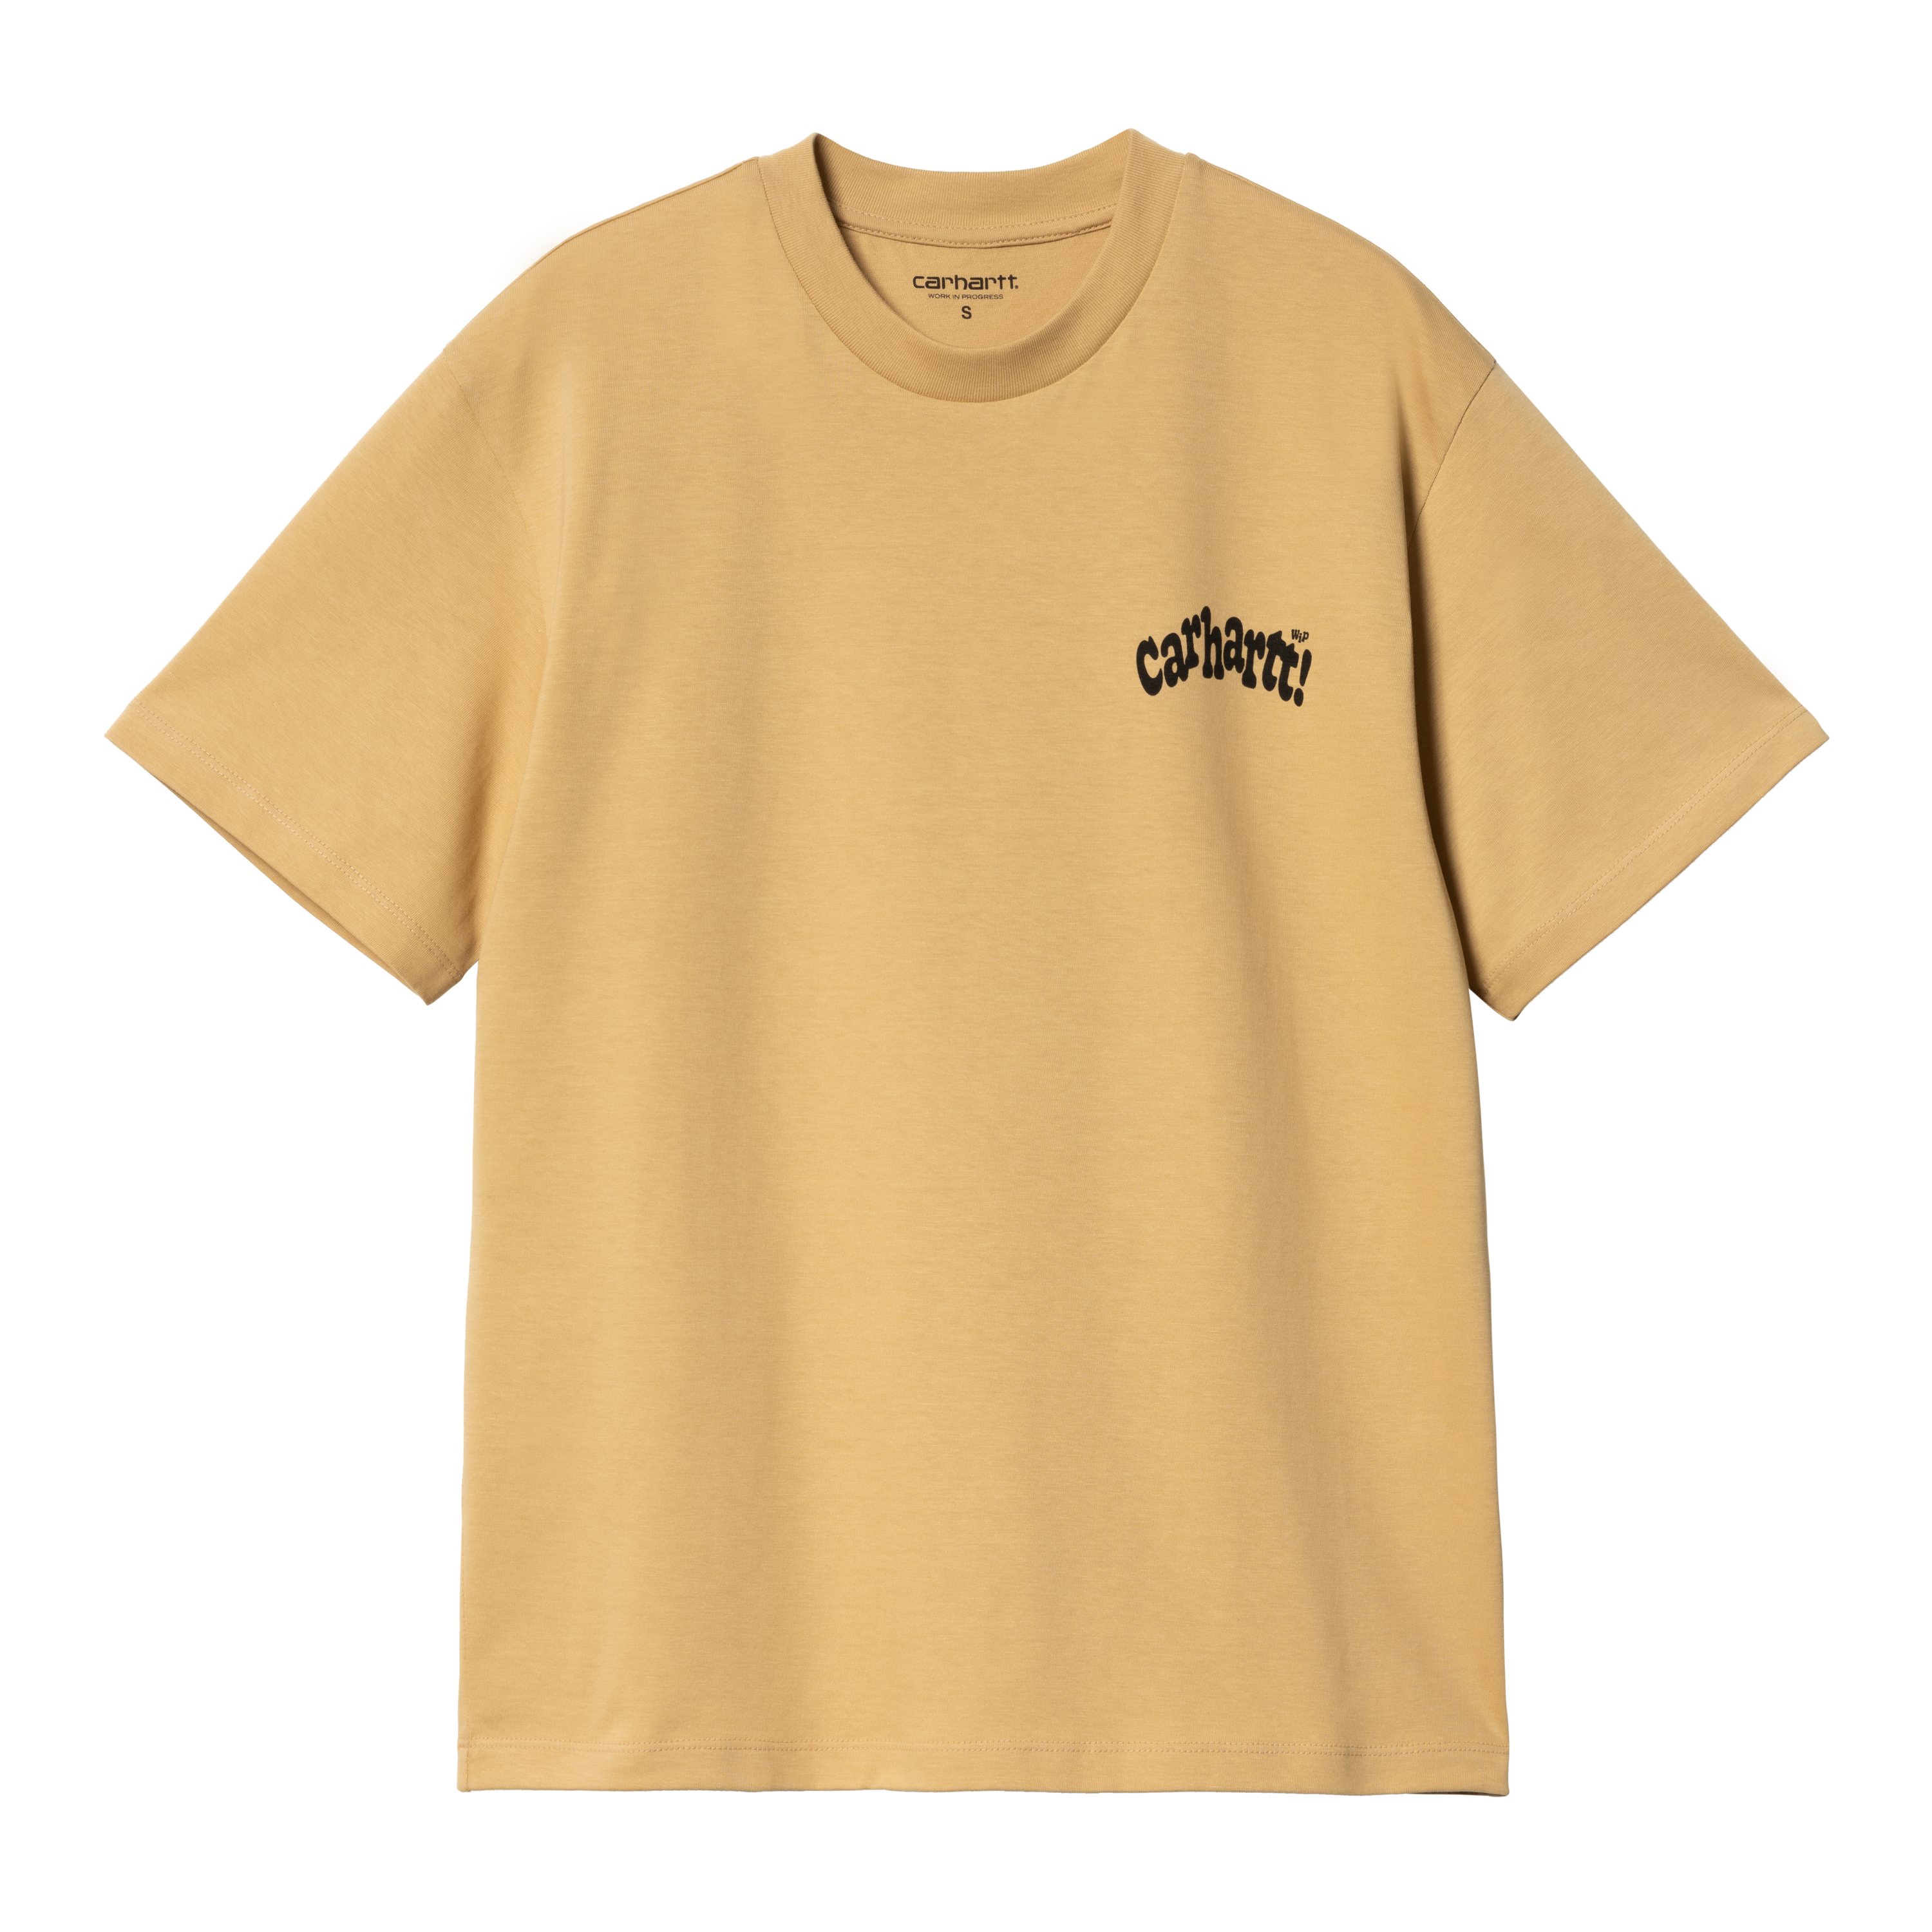 Carhartt WIP Women’s Short Sleeve Amour T-Shirt in Beige